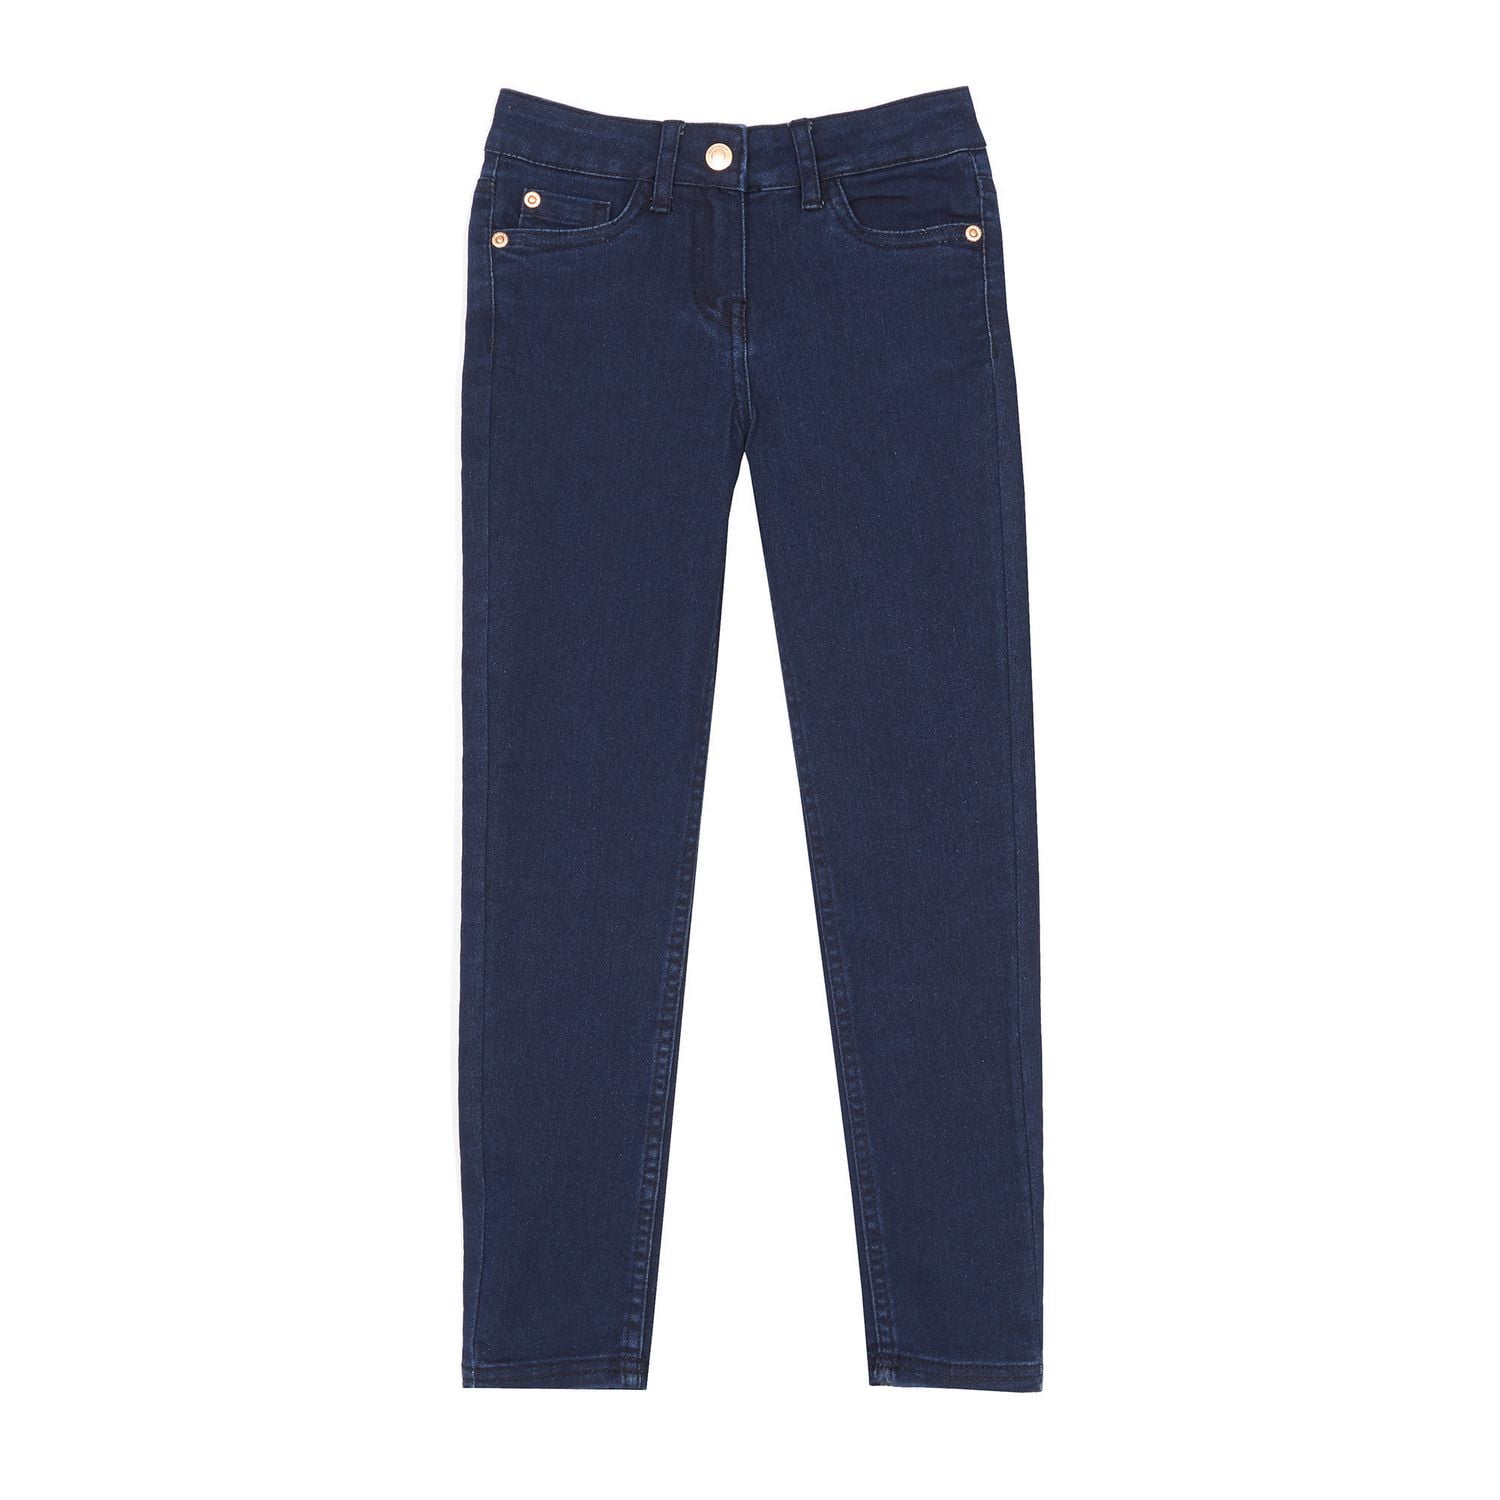 Skinny denim jeans dark blue - GIRLS 2-8 YEARS Bottoms & Jeans